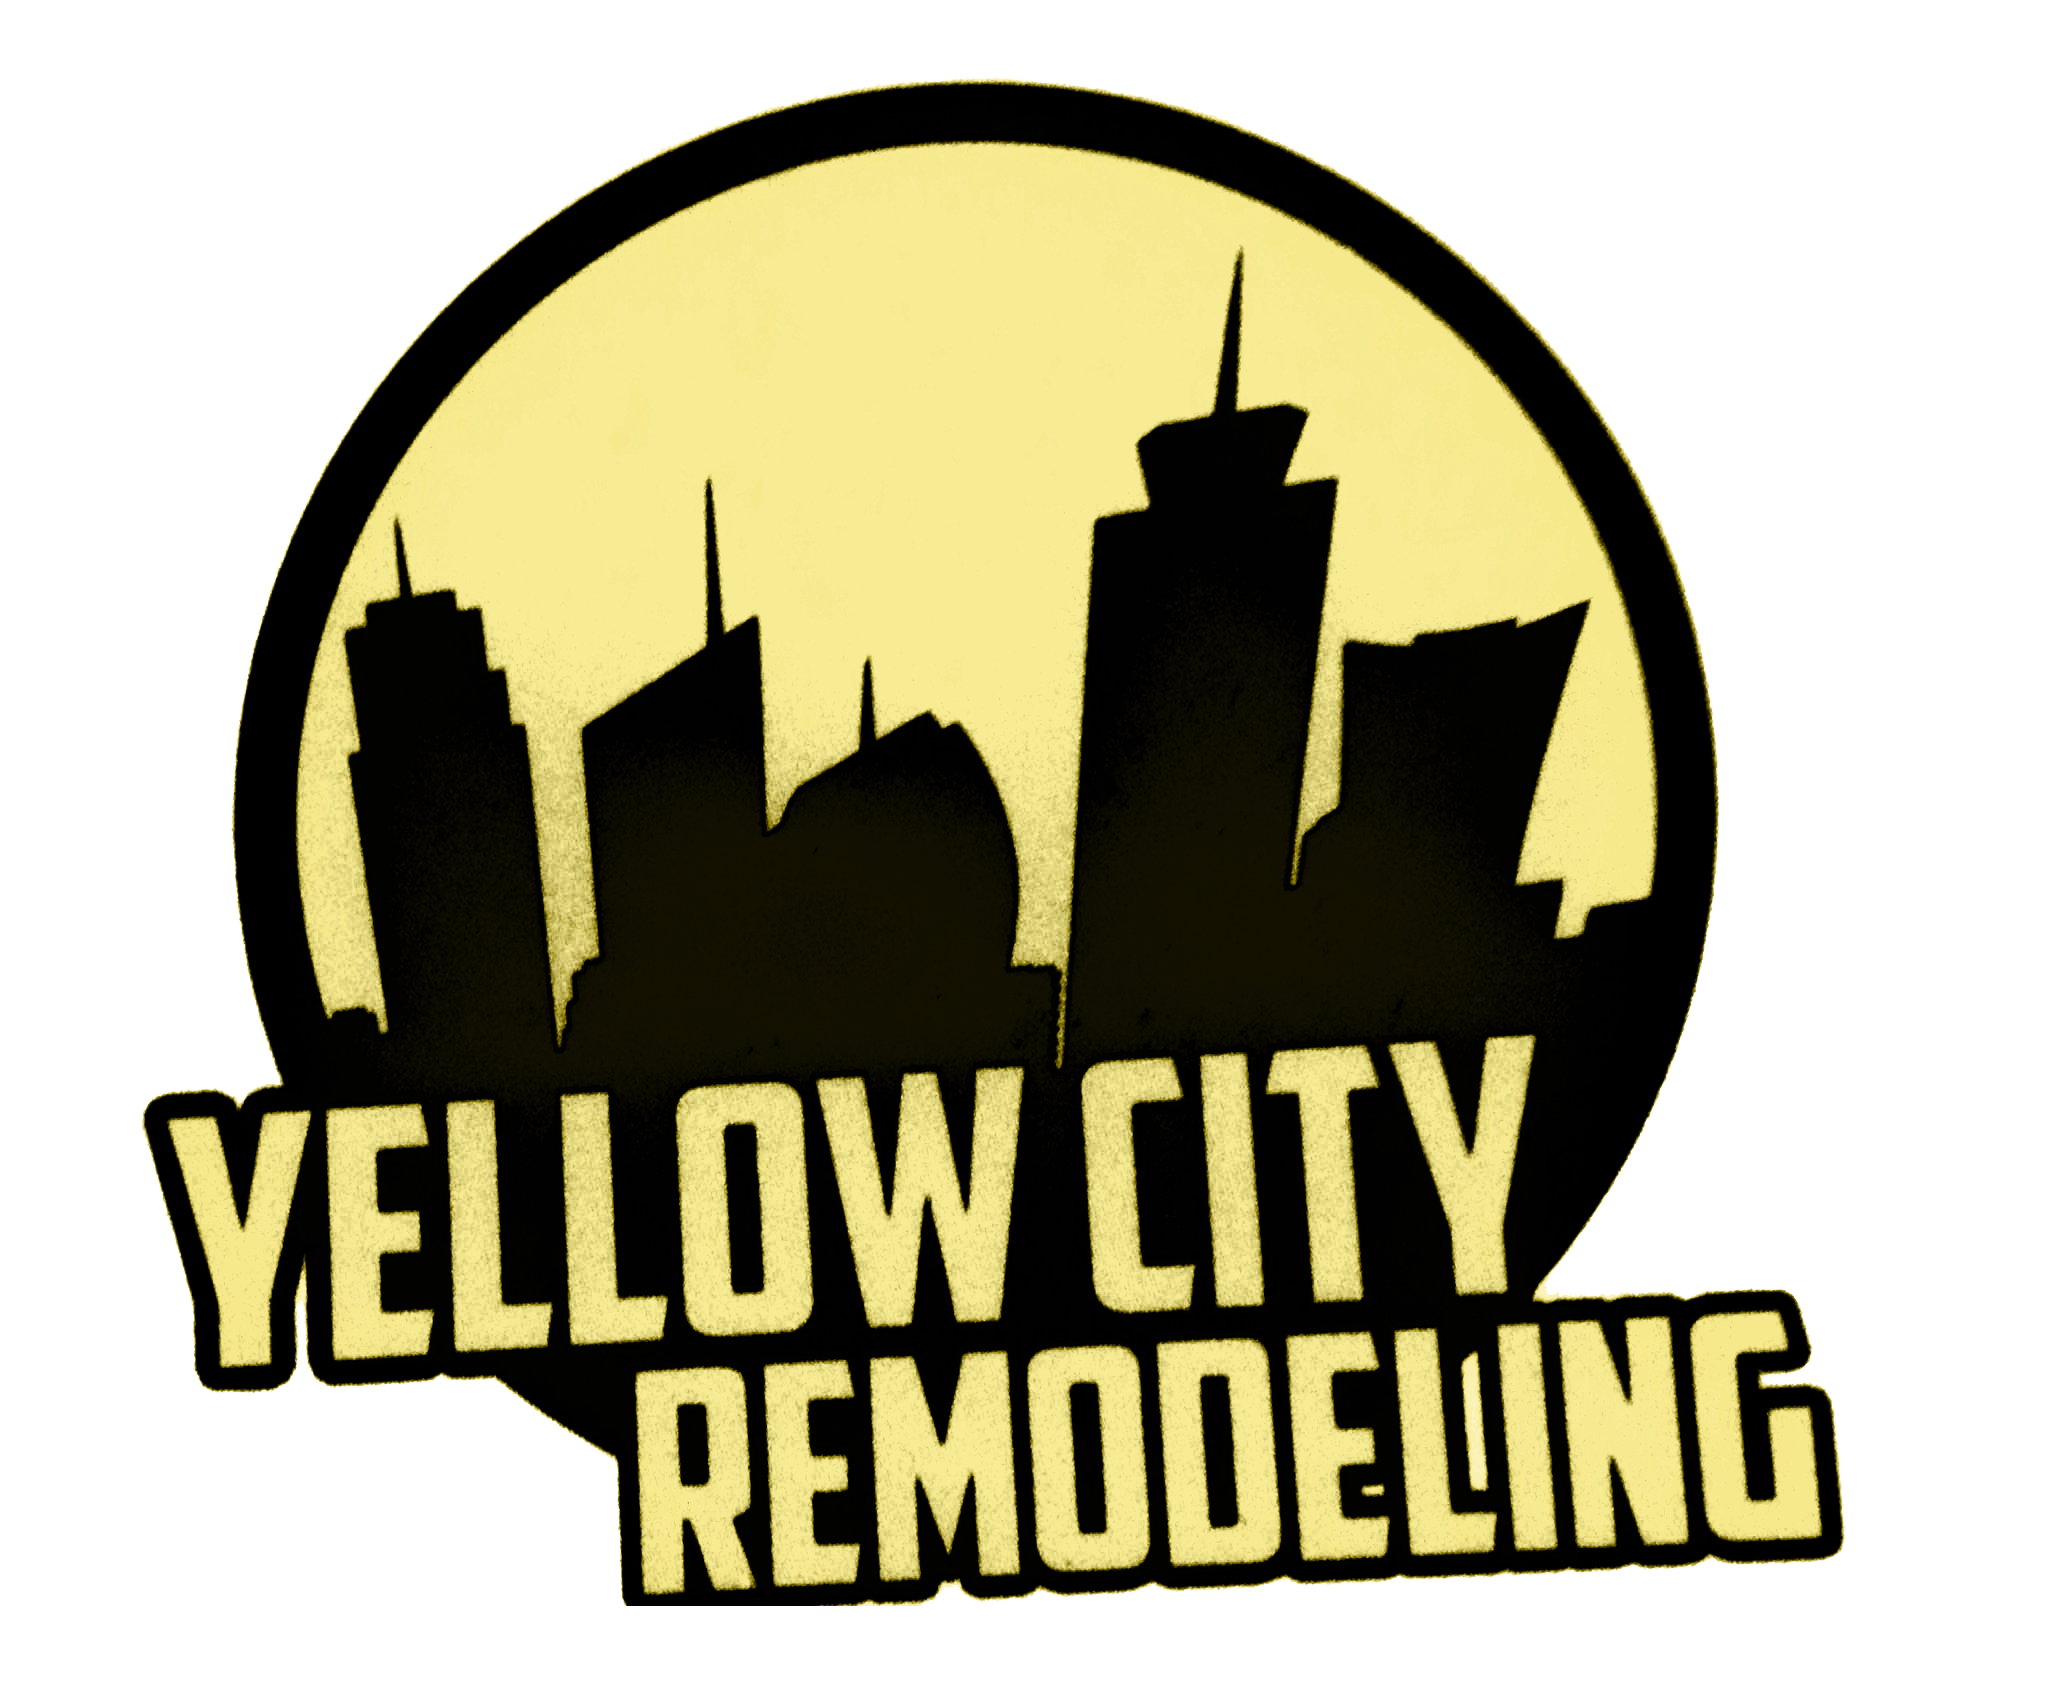 Yellow City Logo - Remodeling Contractor, Exterior Home Improvement: Amarillo, Canyon